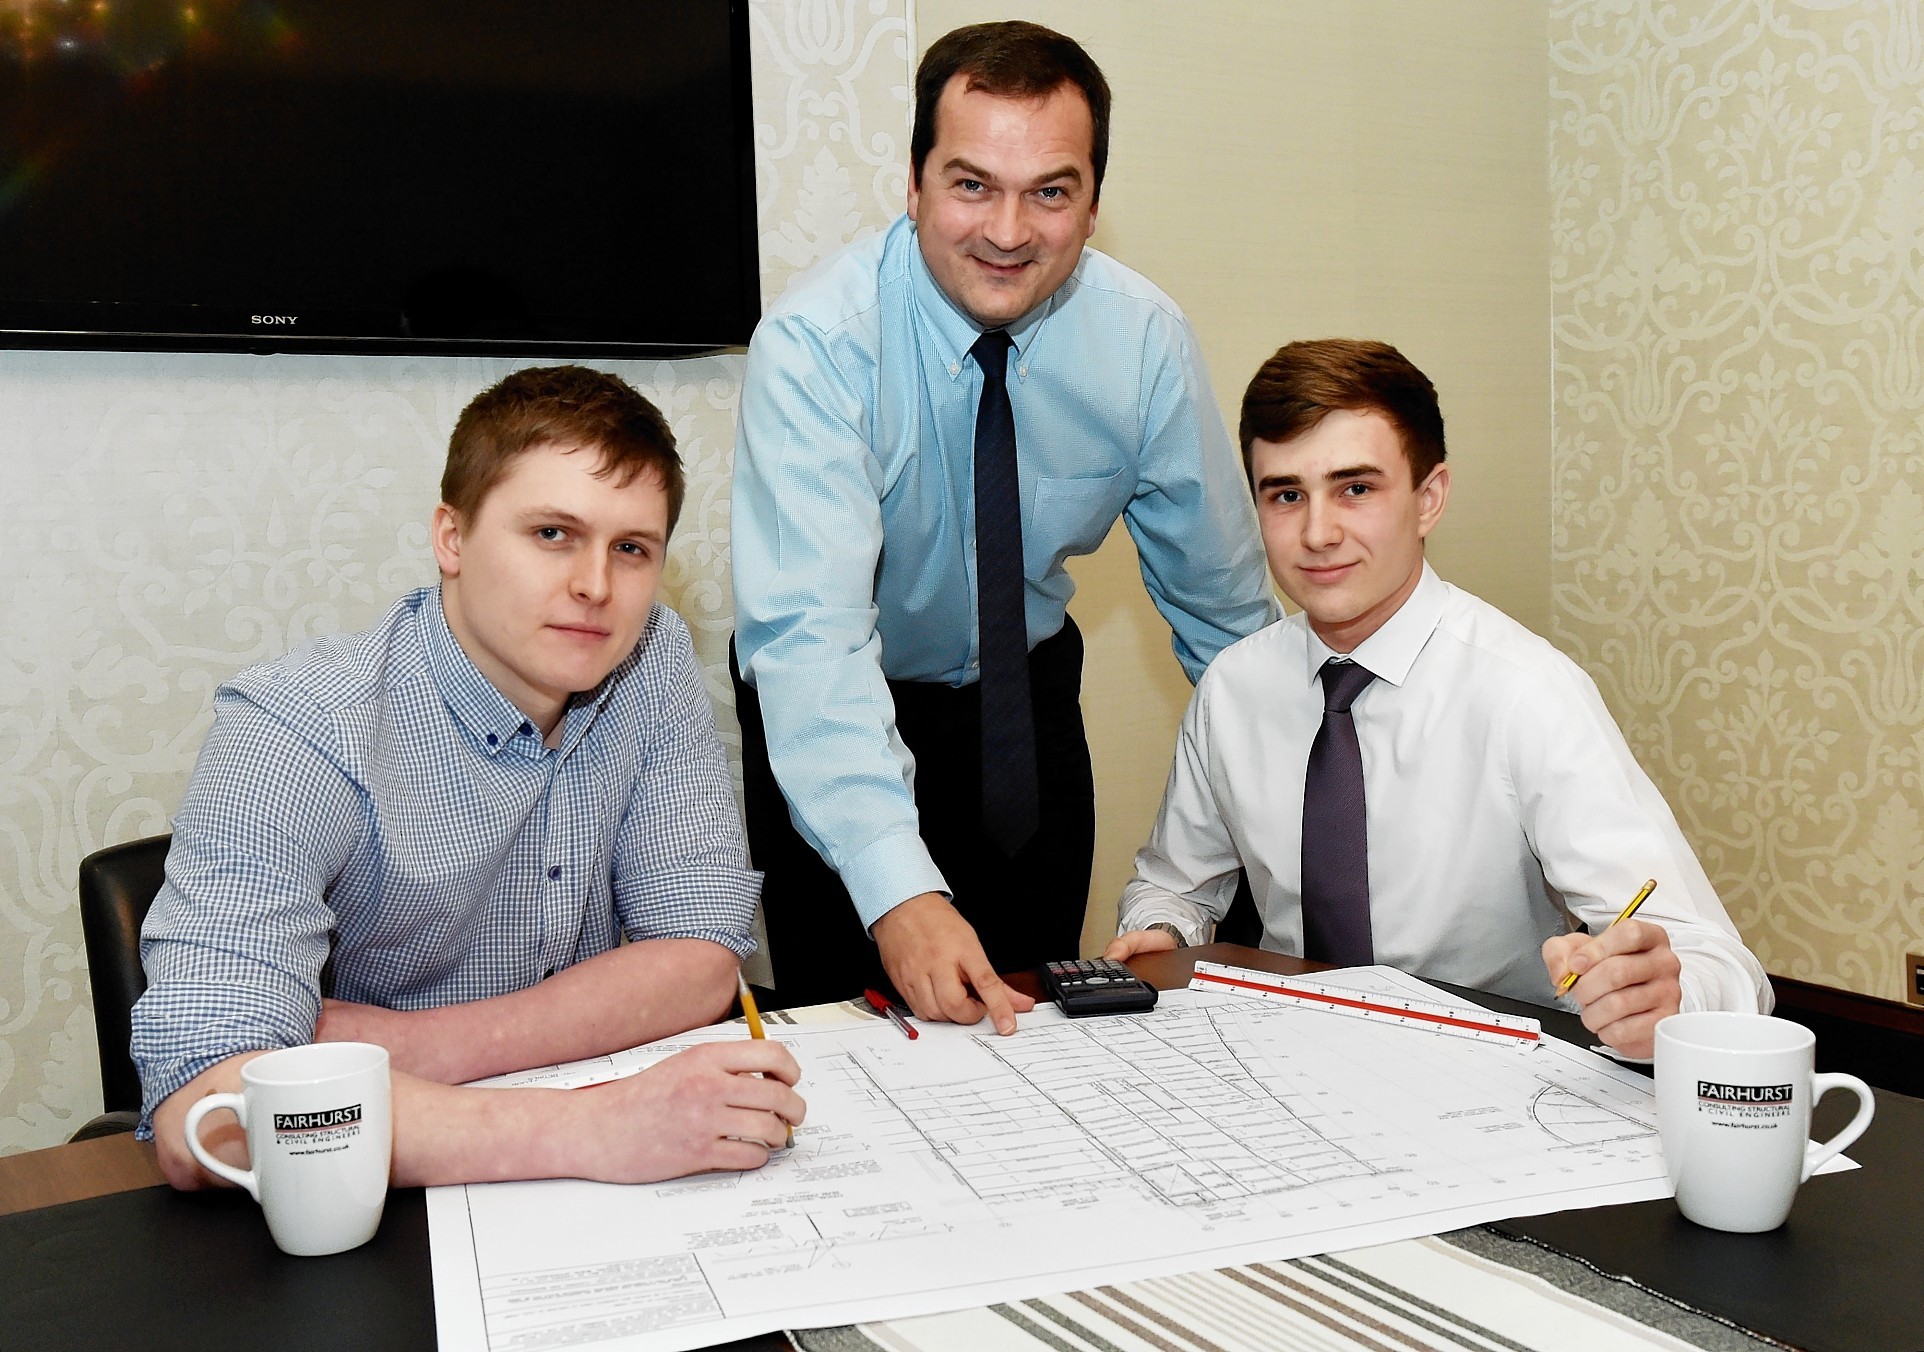 Fairhurst Partner Alastair Scott-Kiddie (centre) with Craig Donaldson (left) and Dale Chapman.